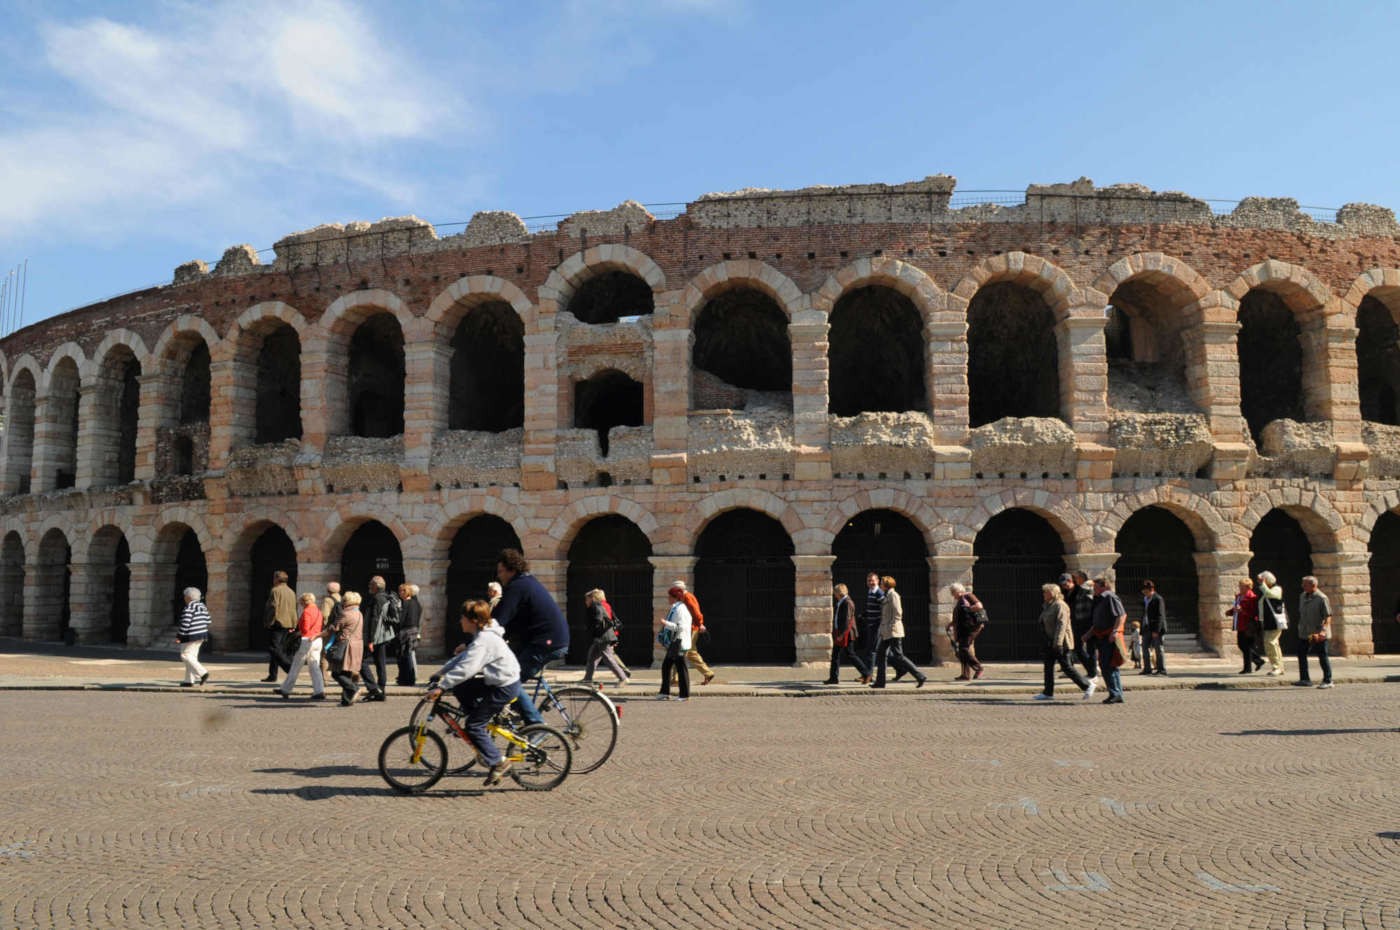 Verona Arena, the symbol of the city